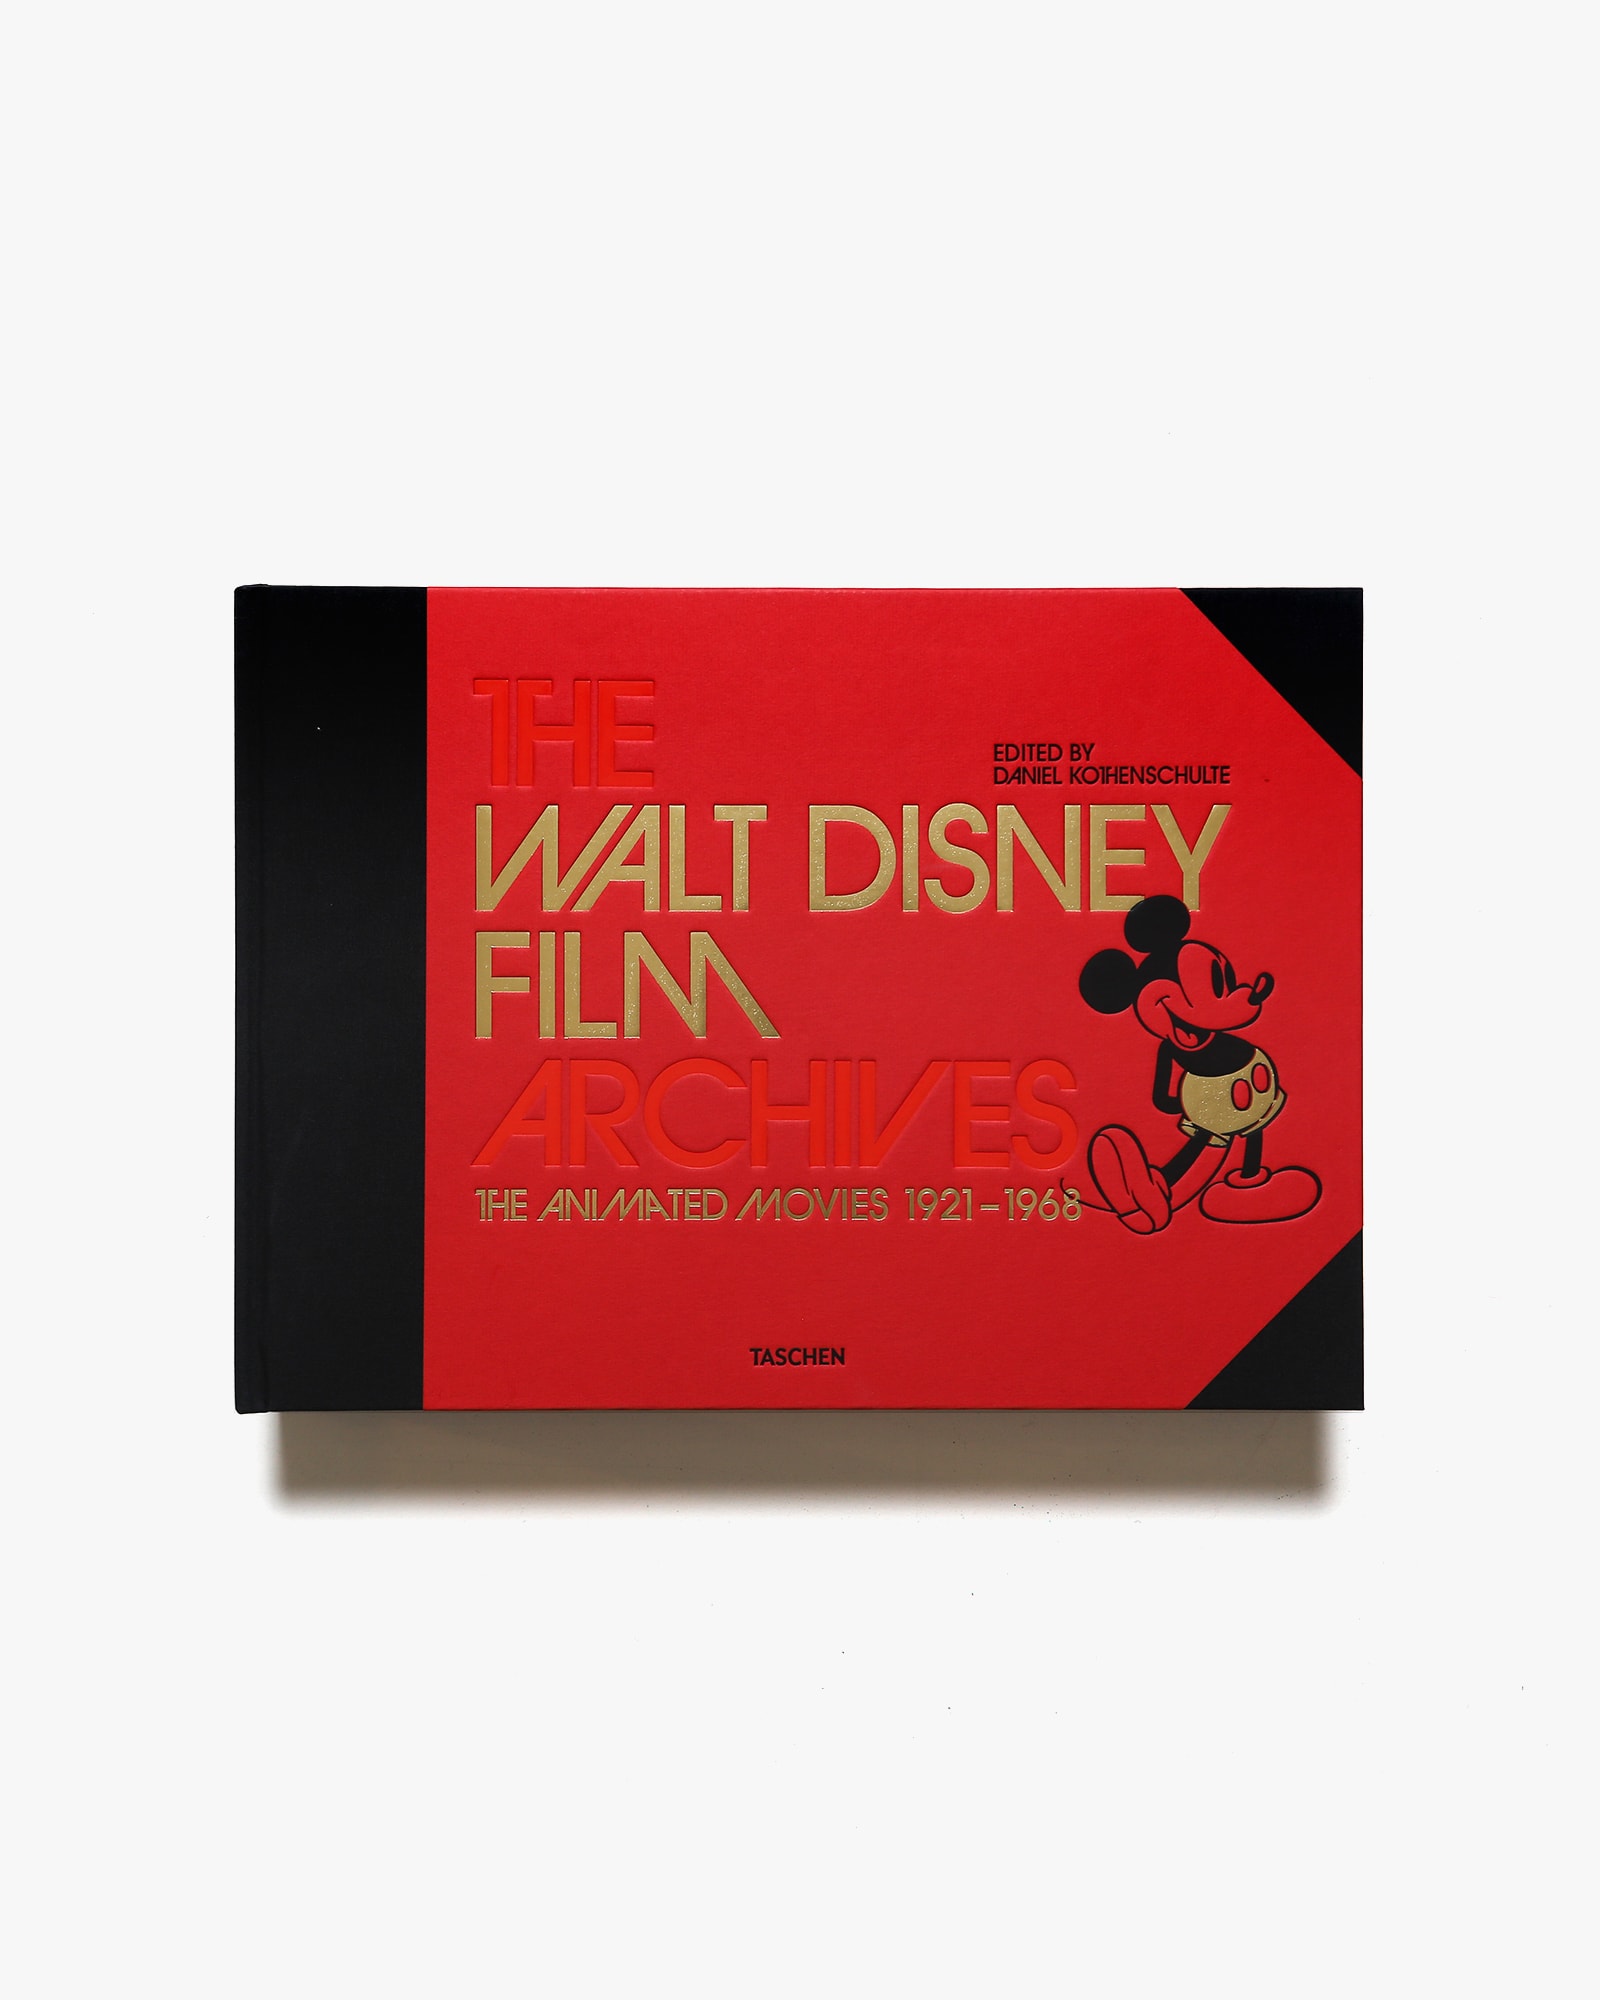 books　The　Daniel　The　1921-1968　nostos　Disney　Walt　Film　ほか　Kothenschulte　Archives:　Movies　Animated　ノストスブックス